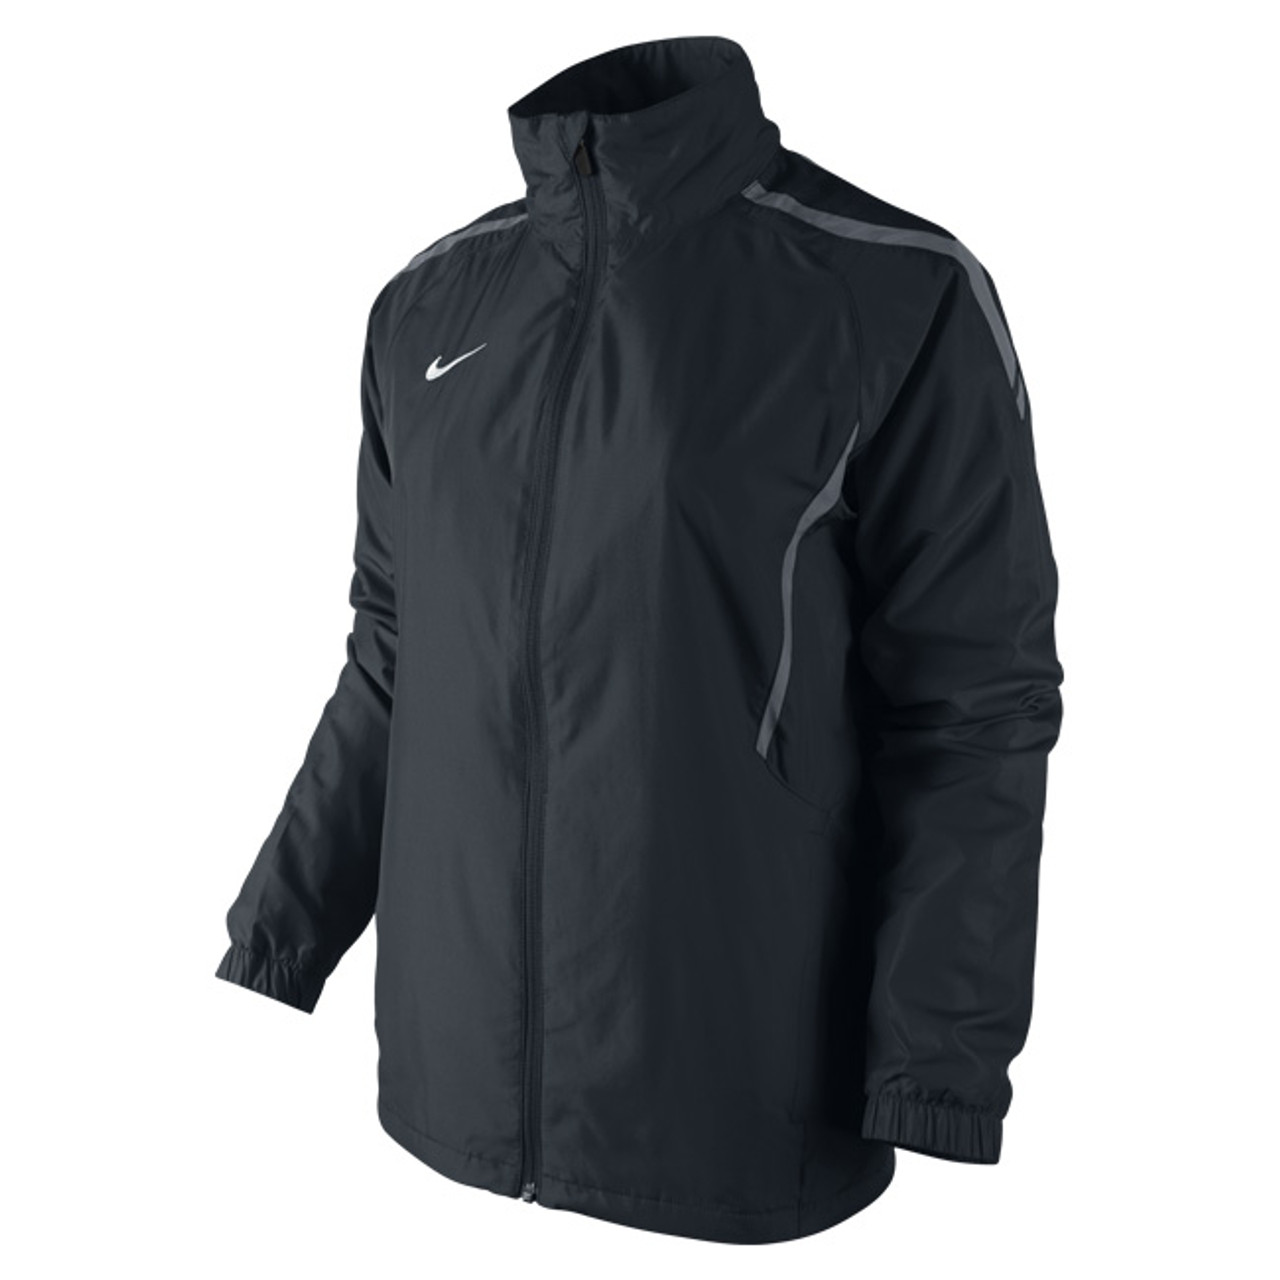 Nike WOMENS Woven Warm-Up Jacket SIZE M (10/12) - Black/Lt Graphite ...